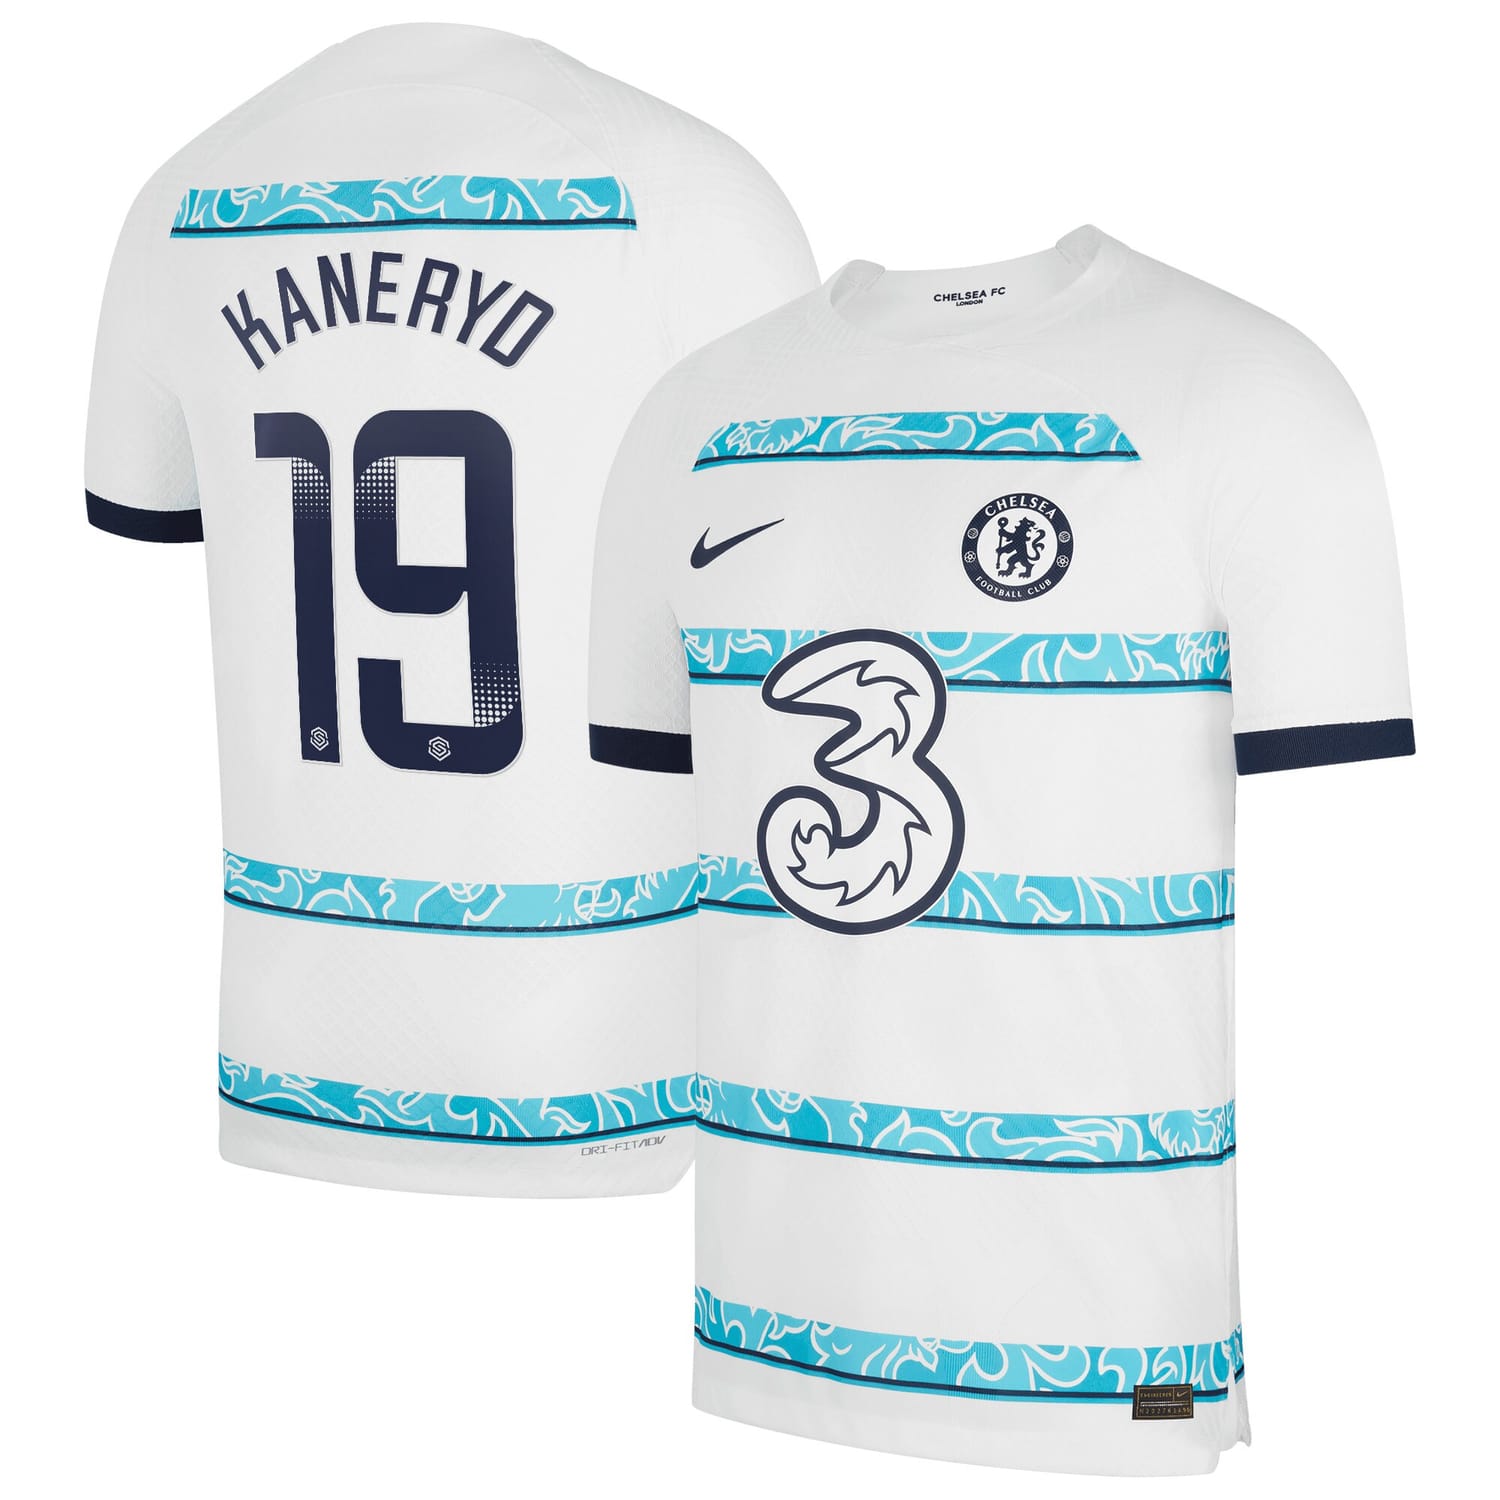 Premier League Chelsea Away WSL Authentic Jersey Shirt 2022-23 player Johanna Rytting Kaneryd 19 printing for Men